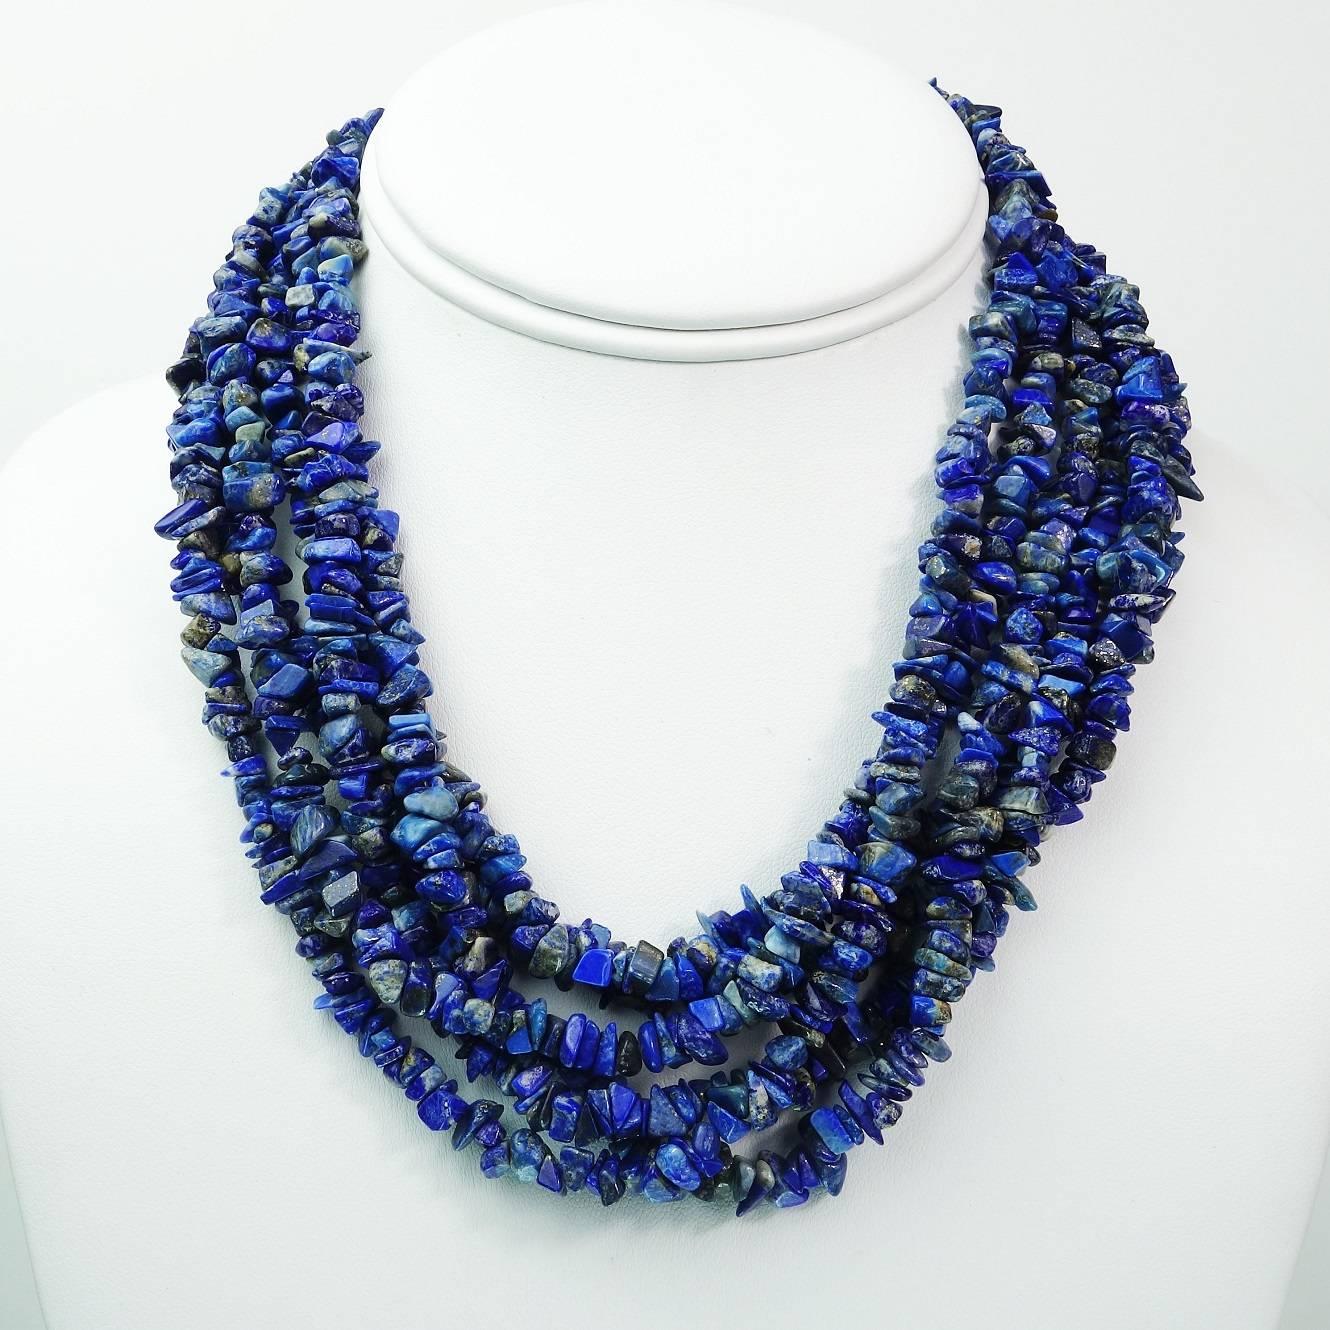 Lapis Lazuli Necklace in three strands  2